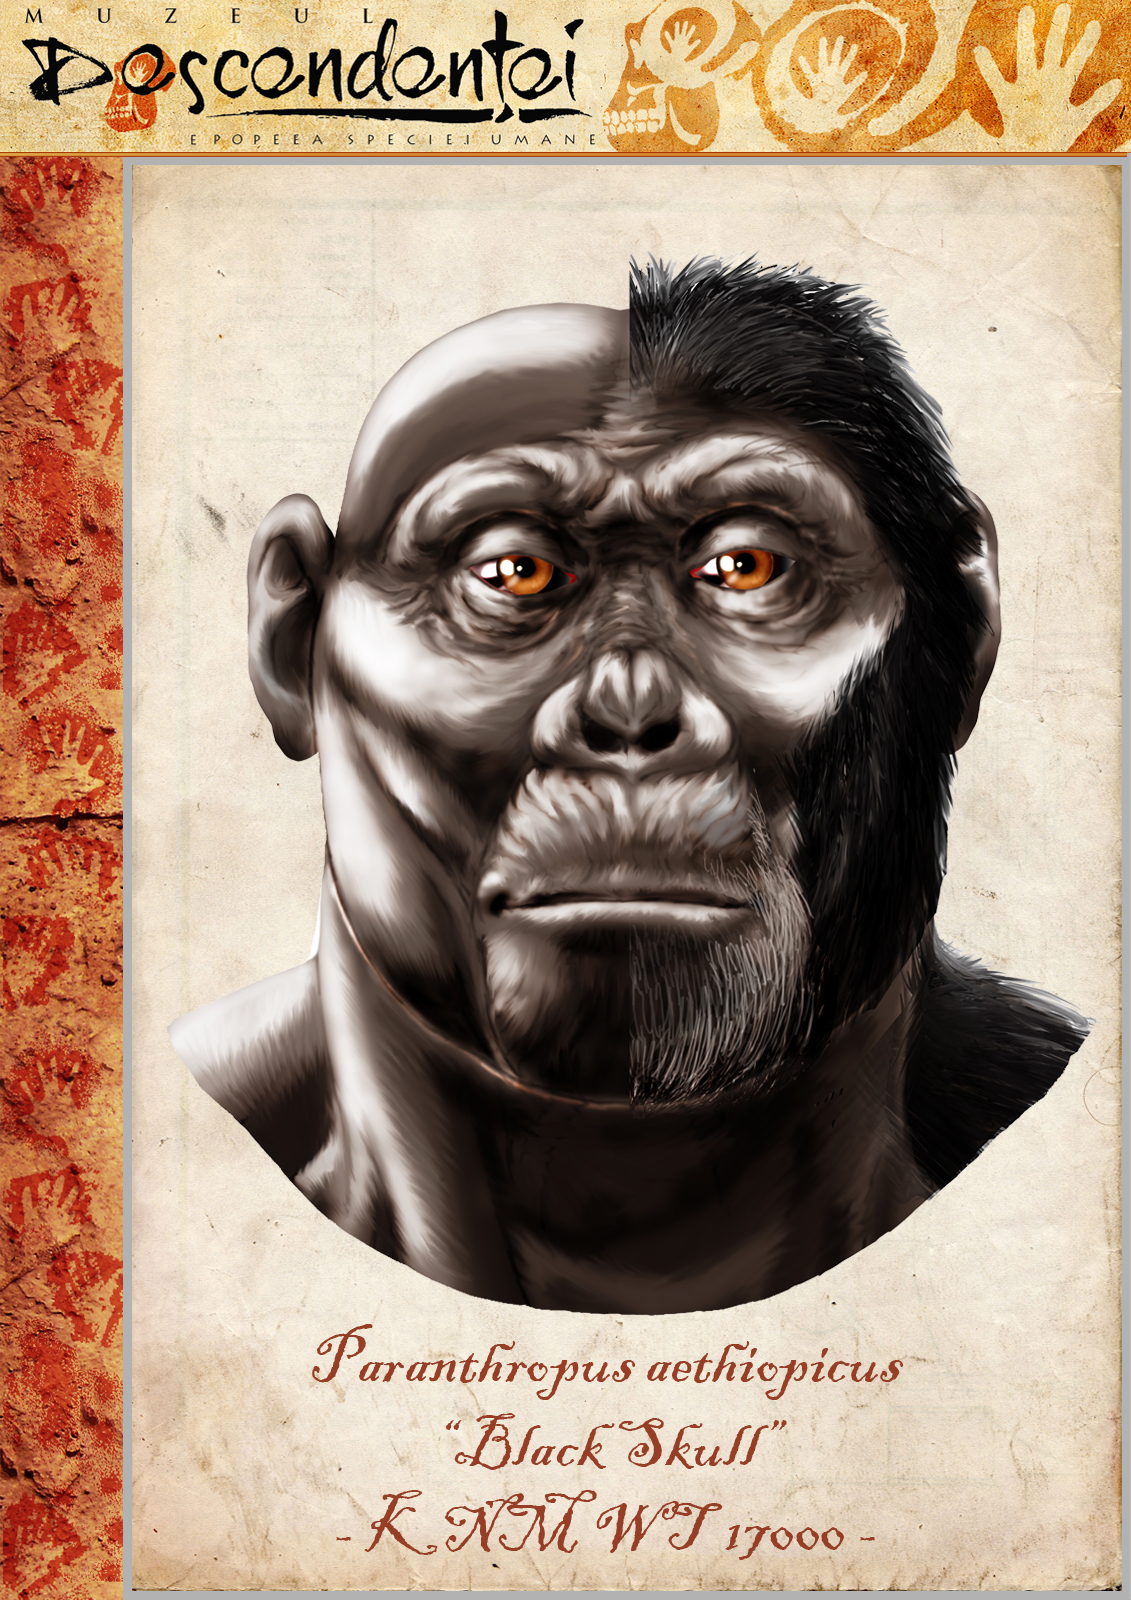 paranthropus aethiopicus boisei robustus australopithecus human evolution neanderthal homo erectus ergaster habilis sahelanthropus kenyanthropus ardipithecus